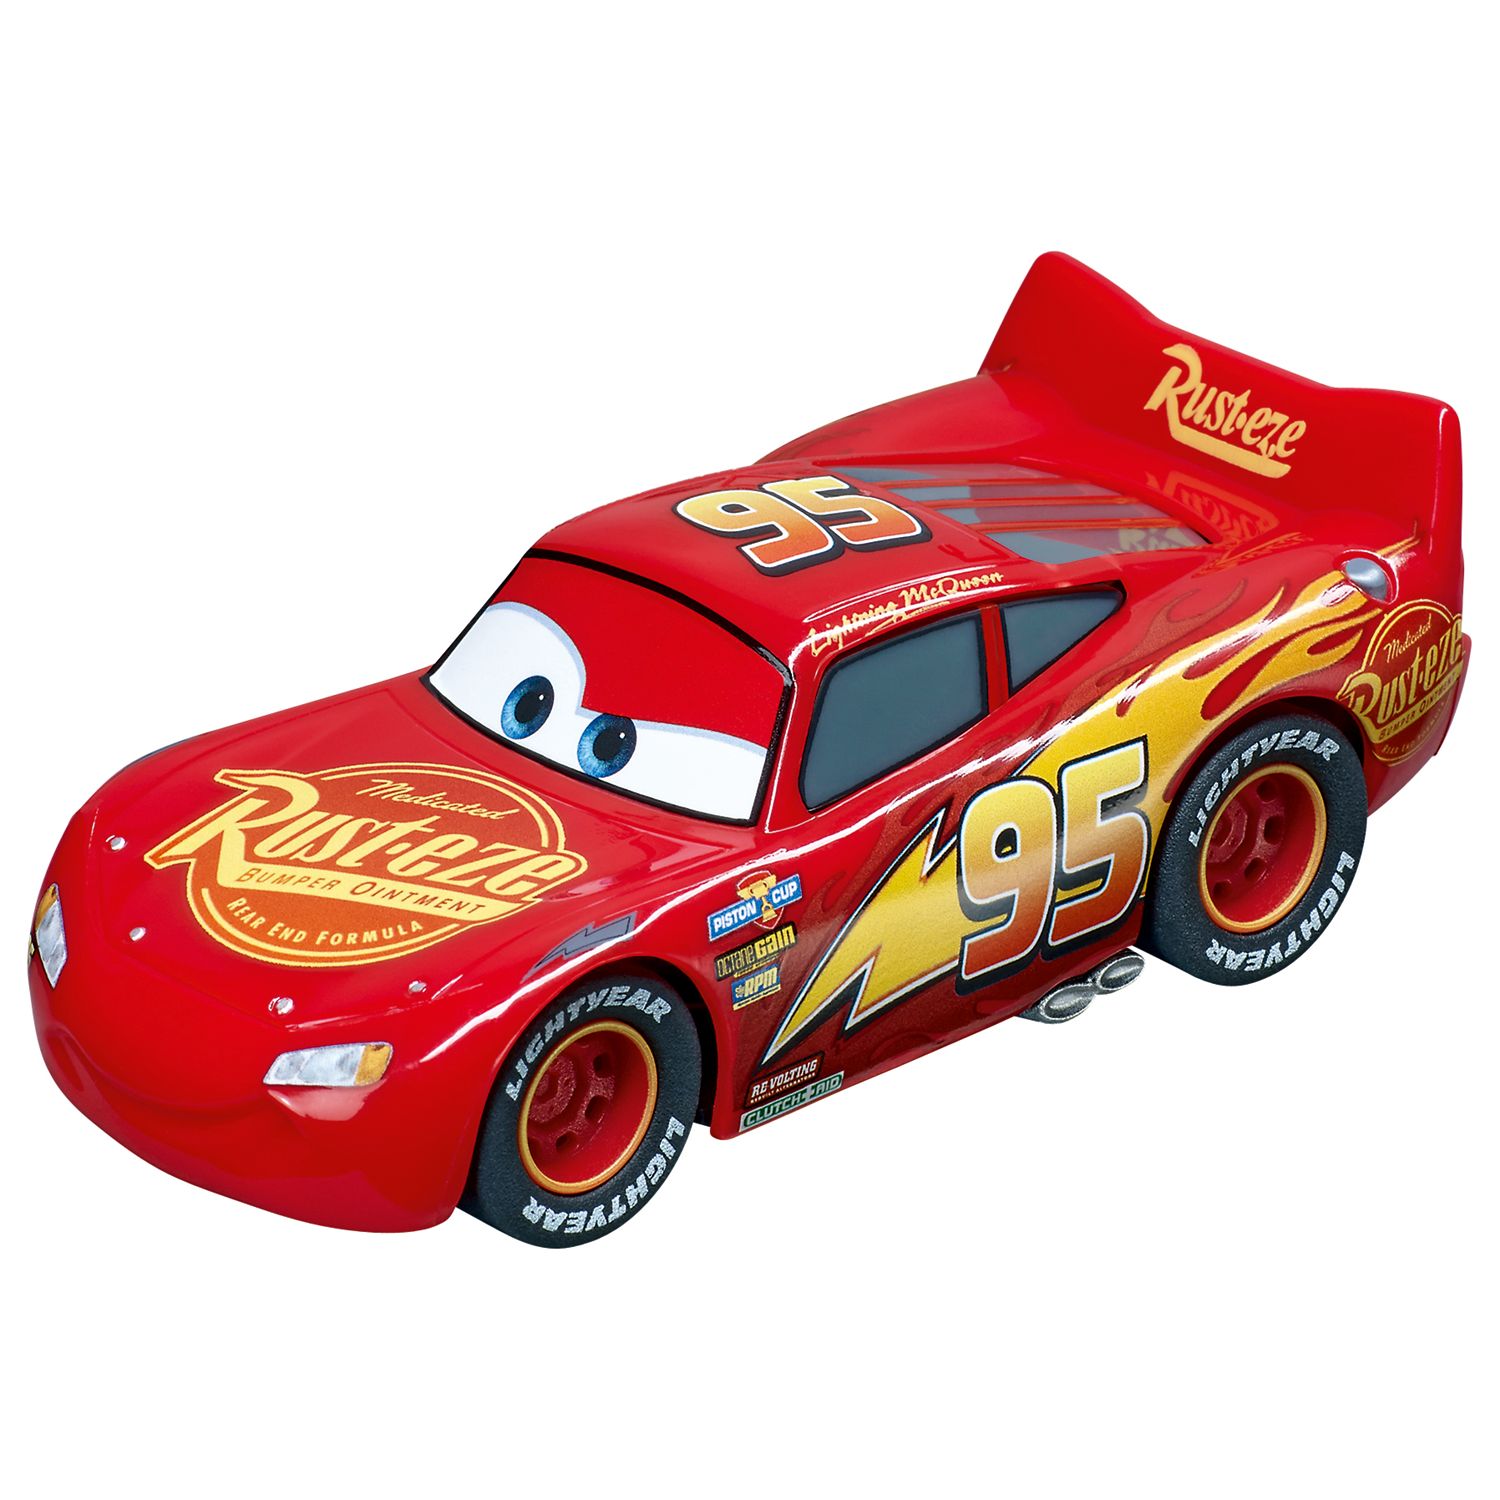 Carrera Go!!! Disney Pixar Cars 3 Racing Set